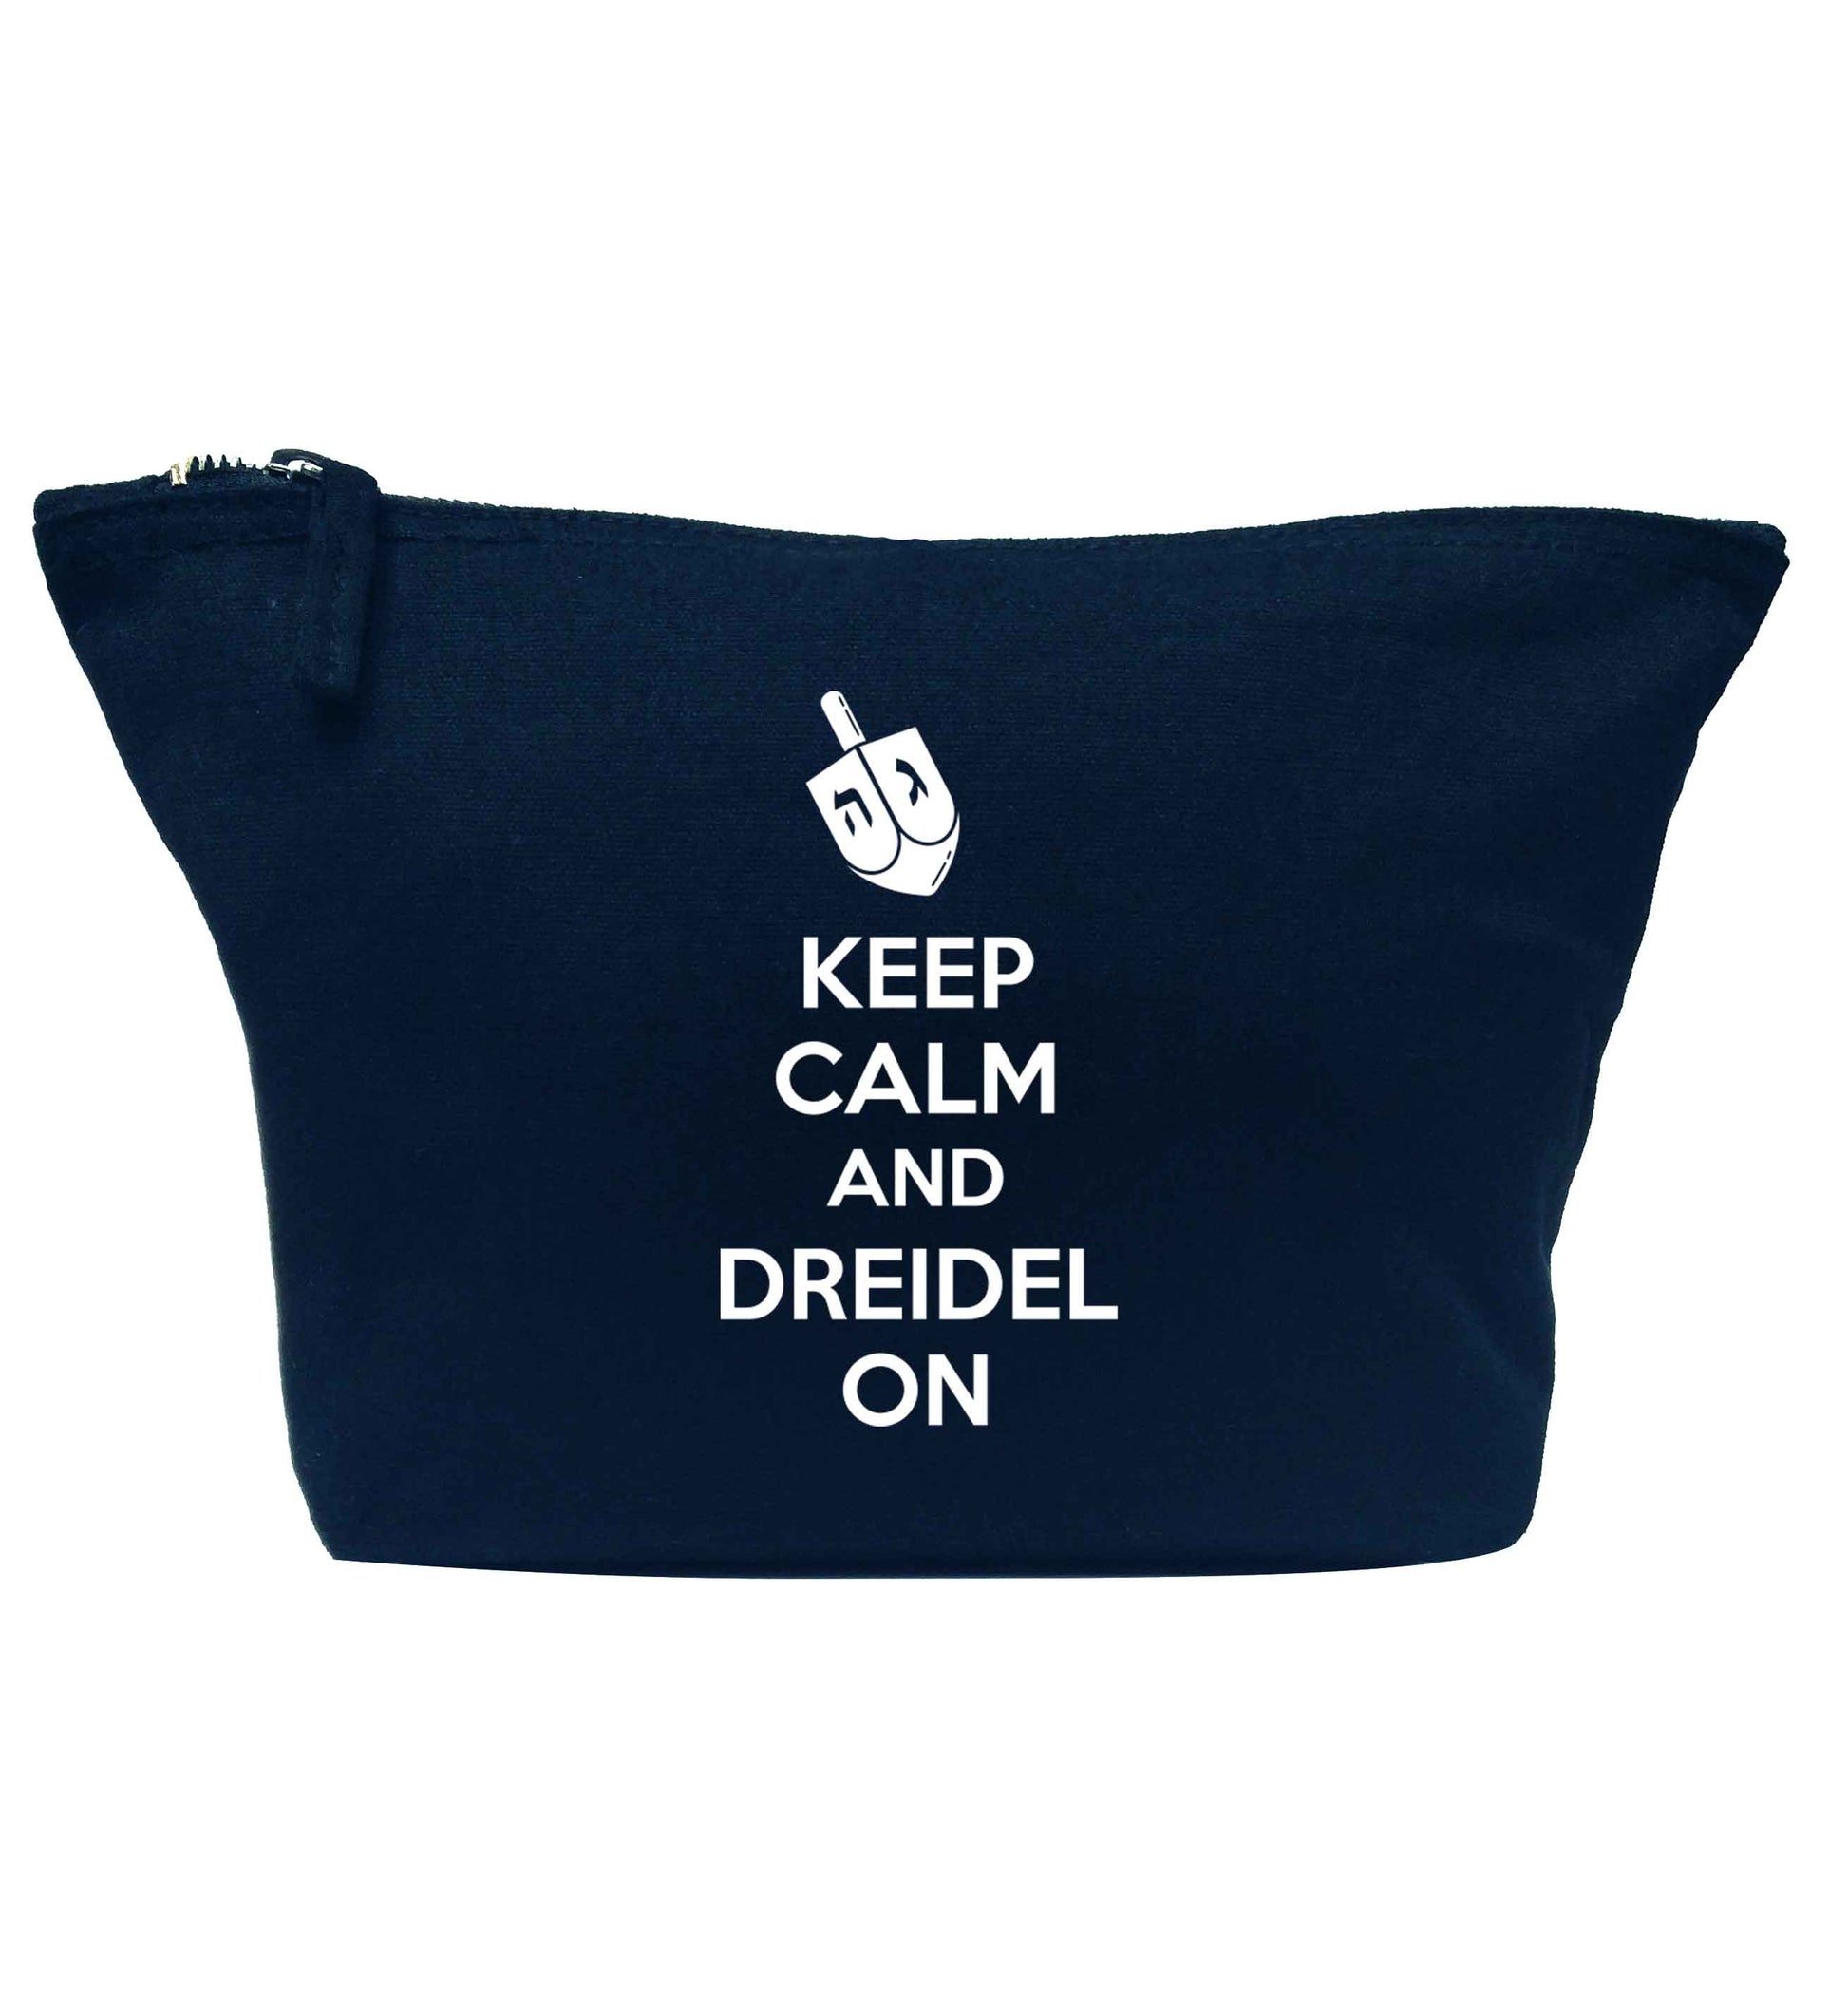 Keep calm and dreidel on navy makeup bag